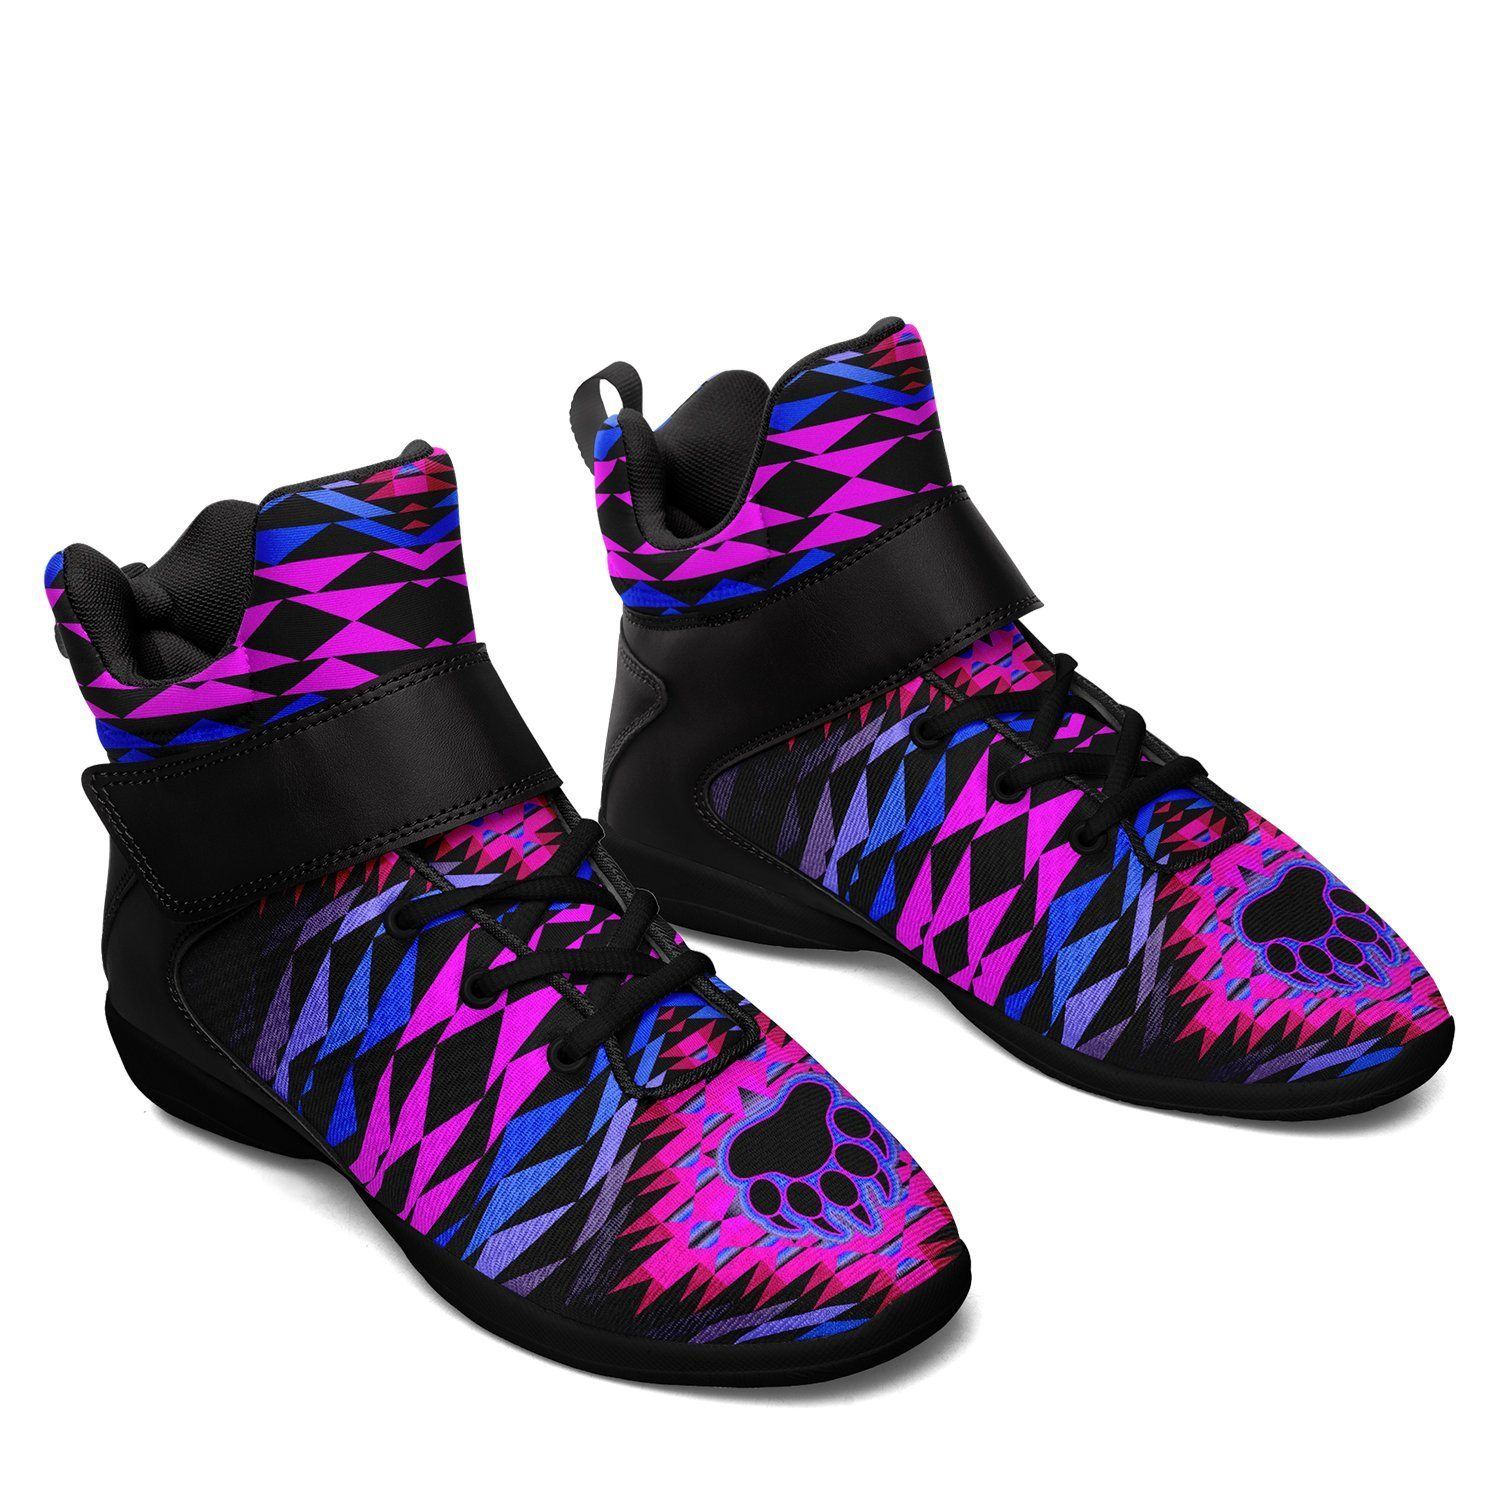 Sunset Bearpaw Blanket Pink Ipottaa Basketball / Sport High Top Shoes - Black Sole 49 Dzine 